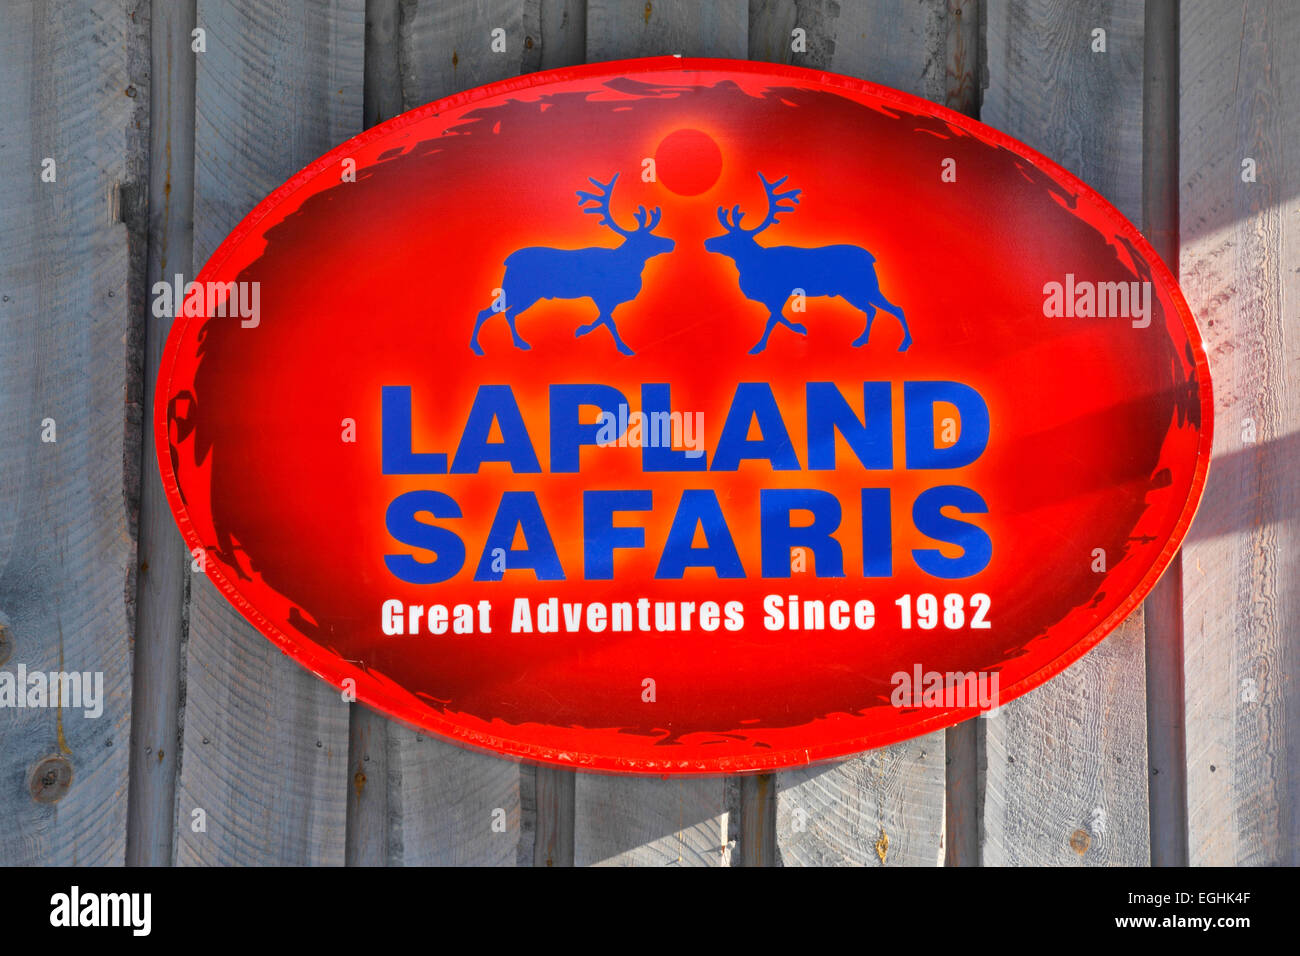 Finland, Lapland safaris, safari advertising billboard Stock Photo